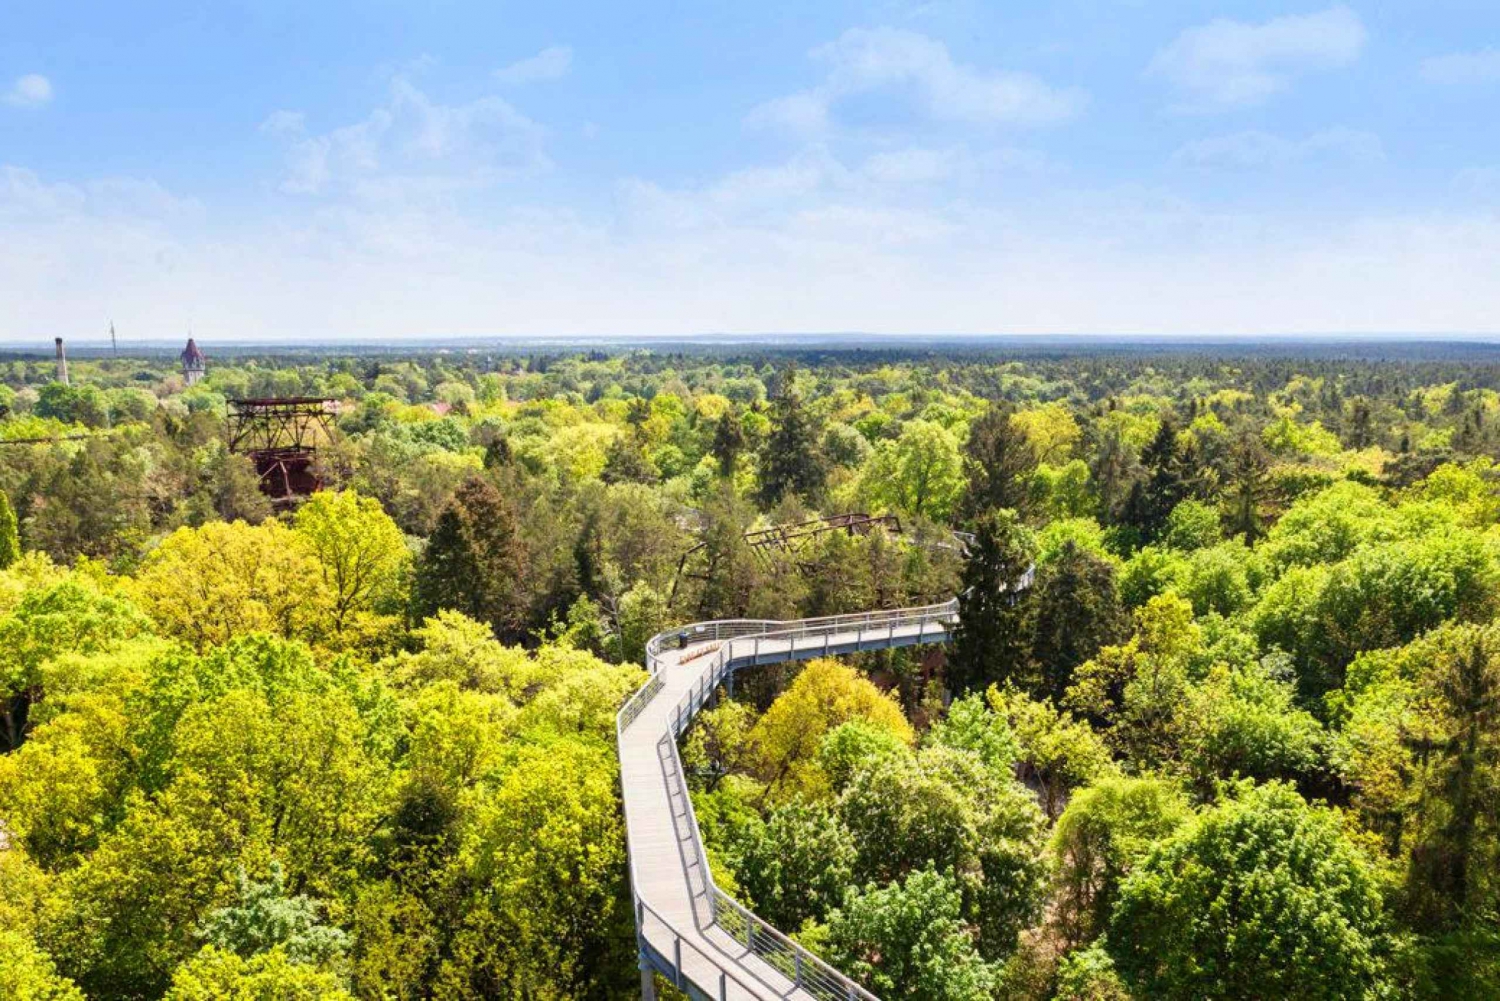 Baum&Zeit Beelitz-Heilstätten: Tree Top Walk Entry Ticket